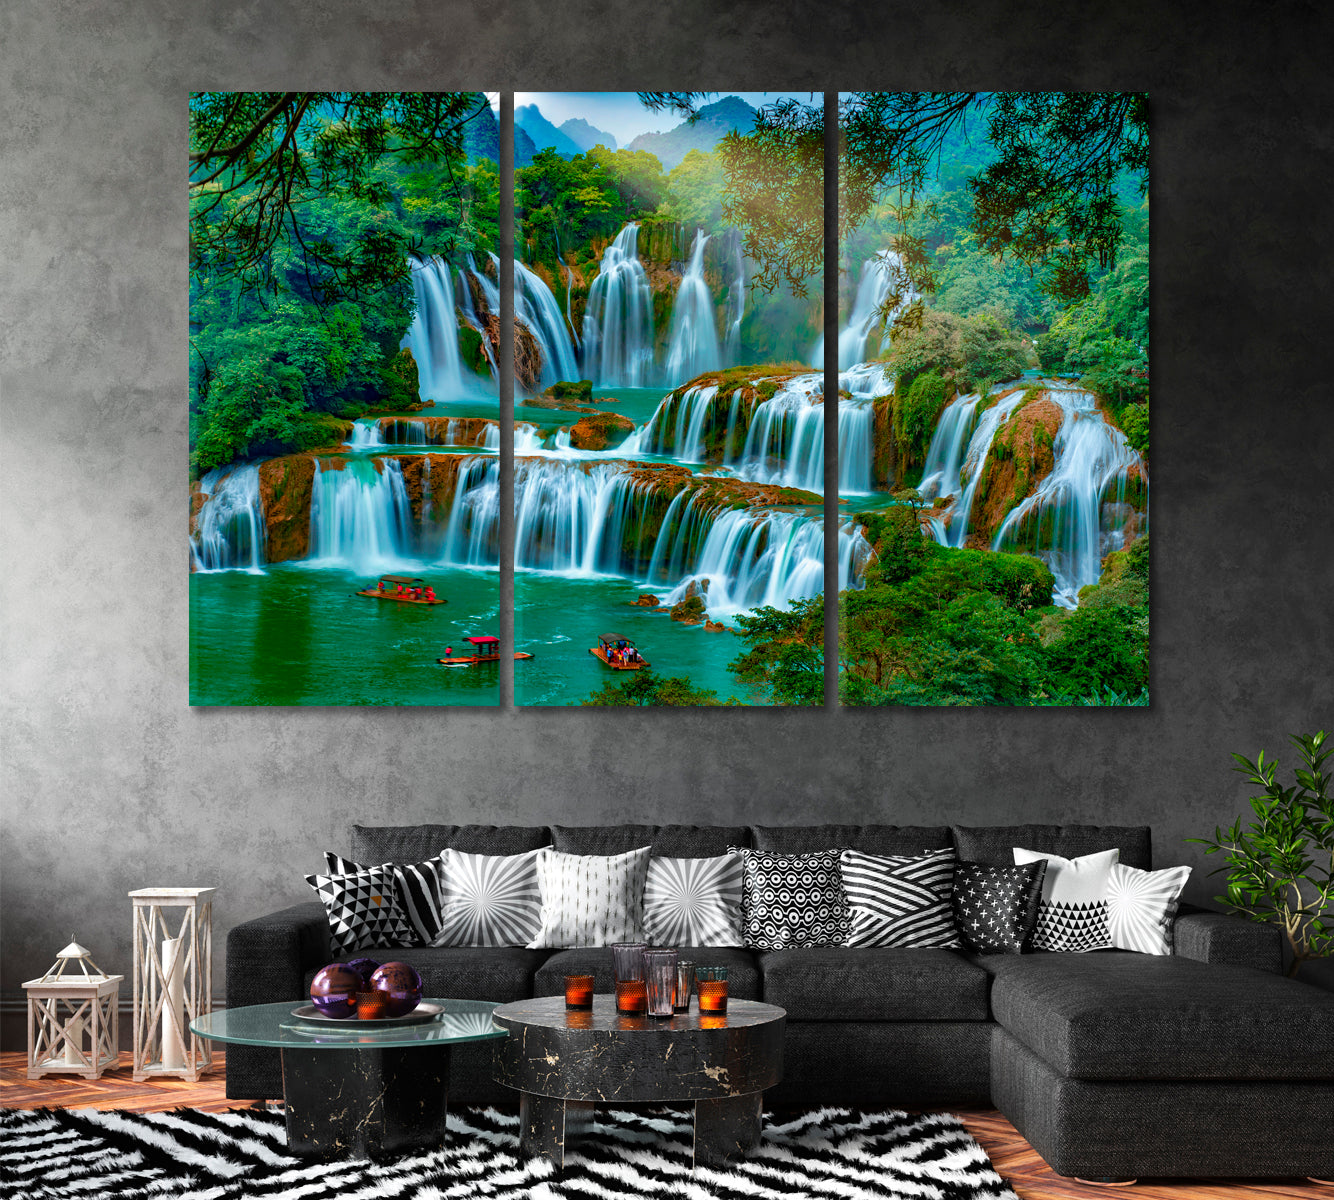 Nanning Detian Waterfall (Ban Gioc Waterfall) Vietnam Canvas Print ArtLexy 3 Panels 36"x24" inches 